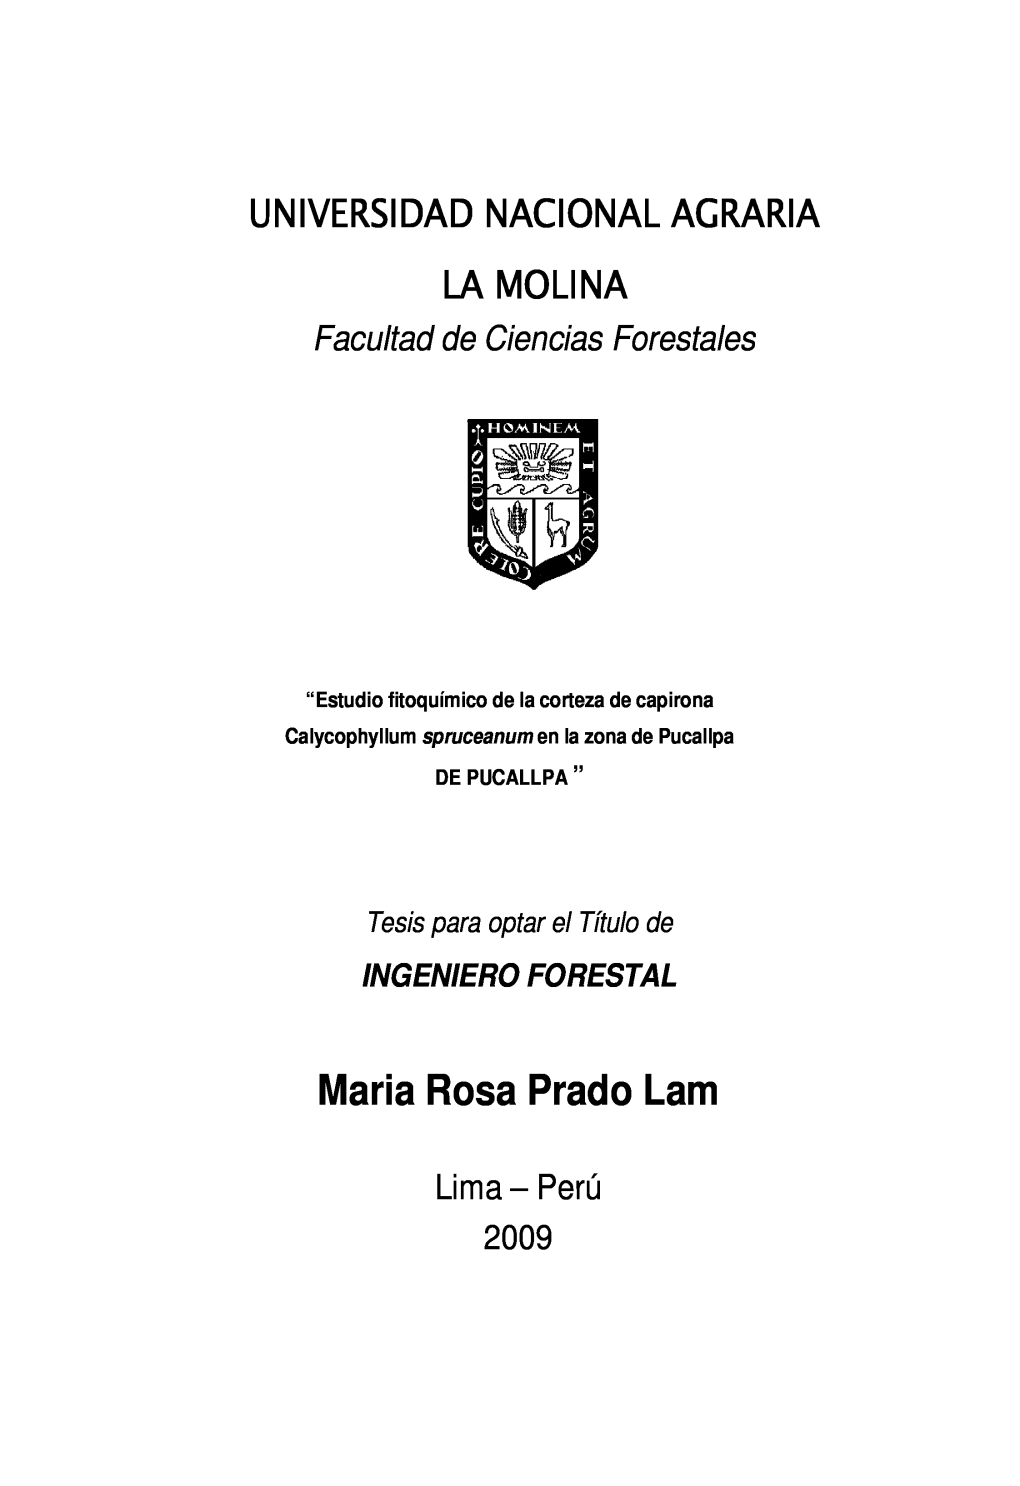 Maria Rosa Prado Lam